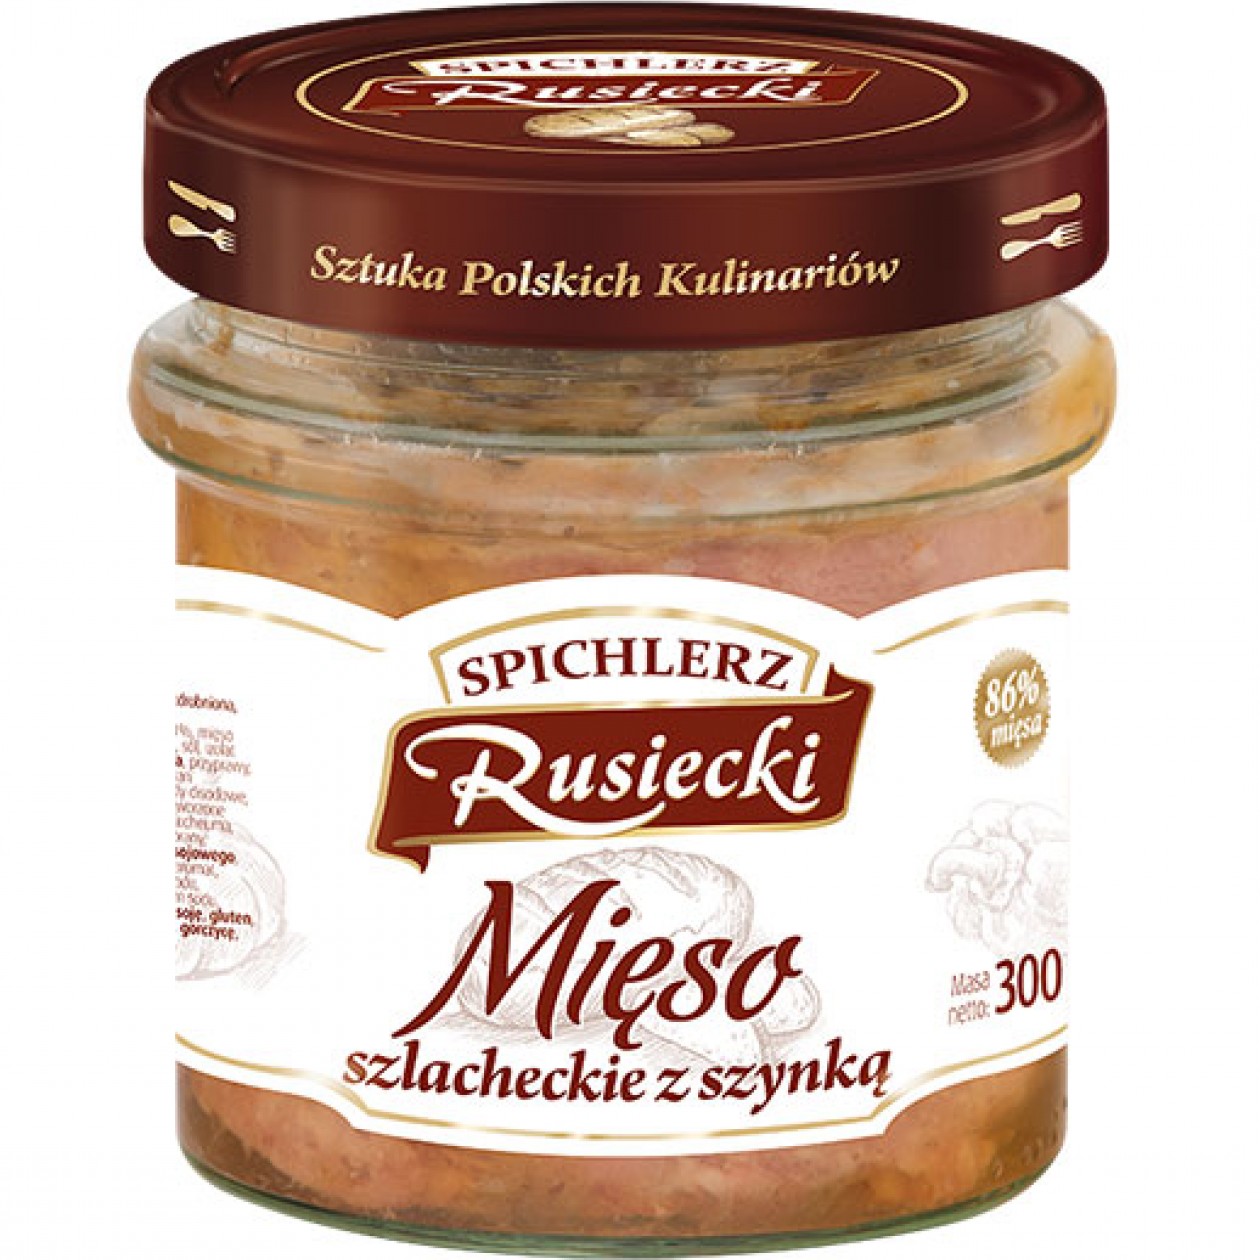 Rusiecki Mieso Szlacheckie (County meat with ham) 8x300g